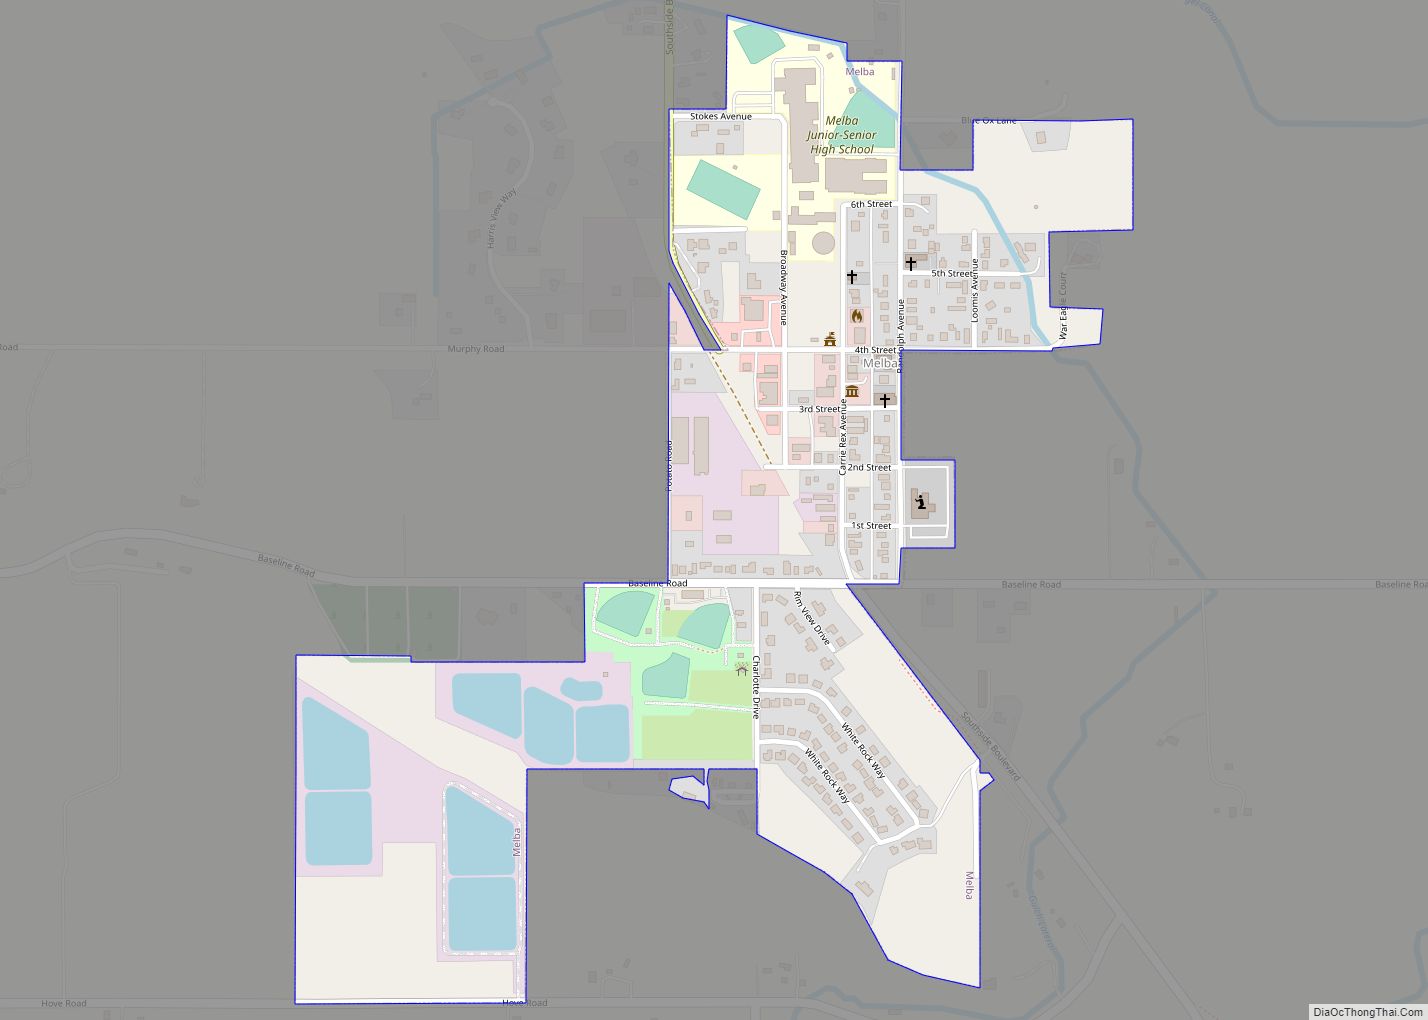 Map of Melba city